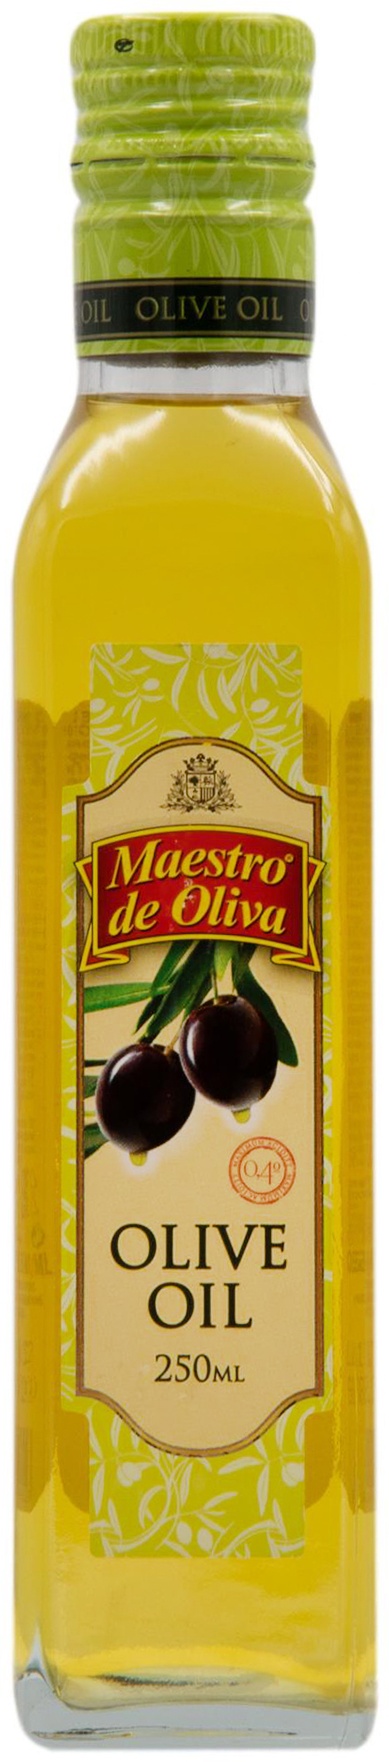 Maestro de Oliva оливковое масло. Масло оливковое рафинированное. Масло маэстро де олива железные банки. Маэстро де олива оливковое масло где указана кислотность. Оливковое масло maestro